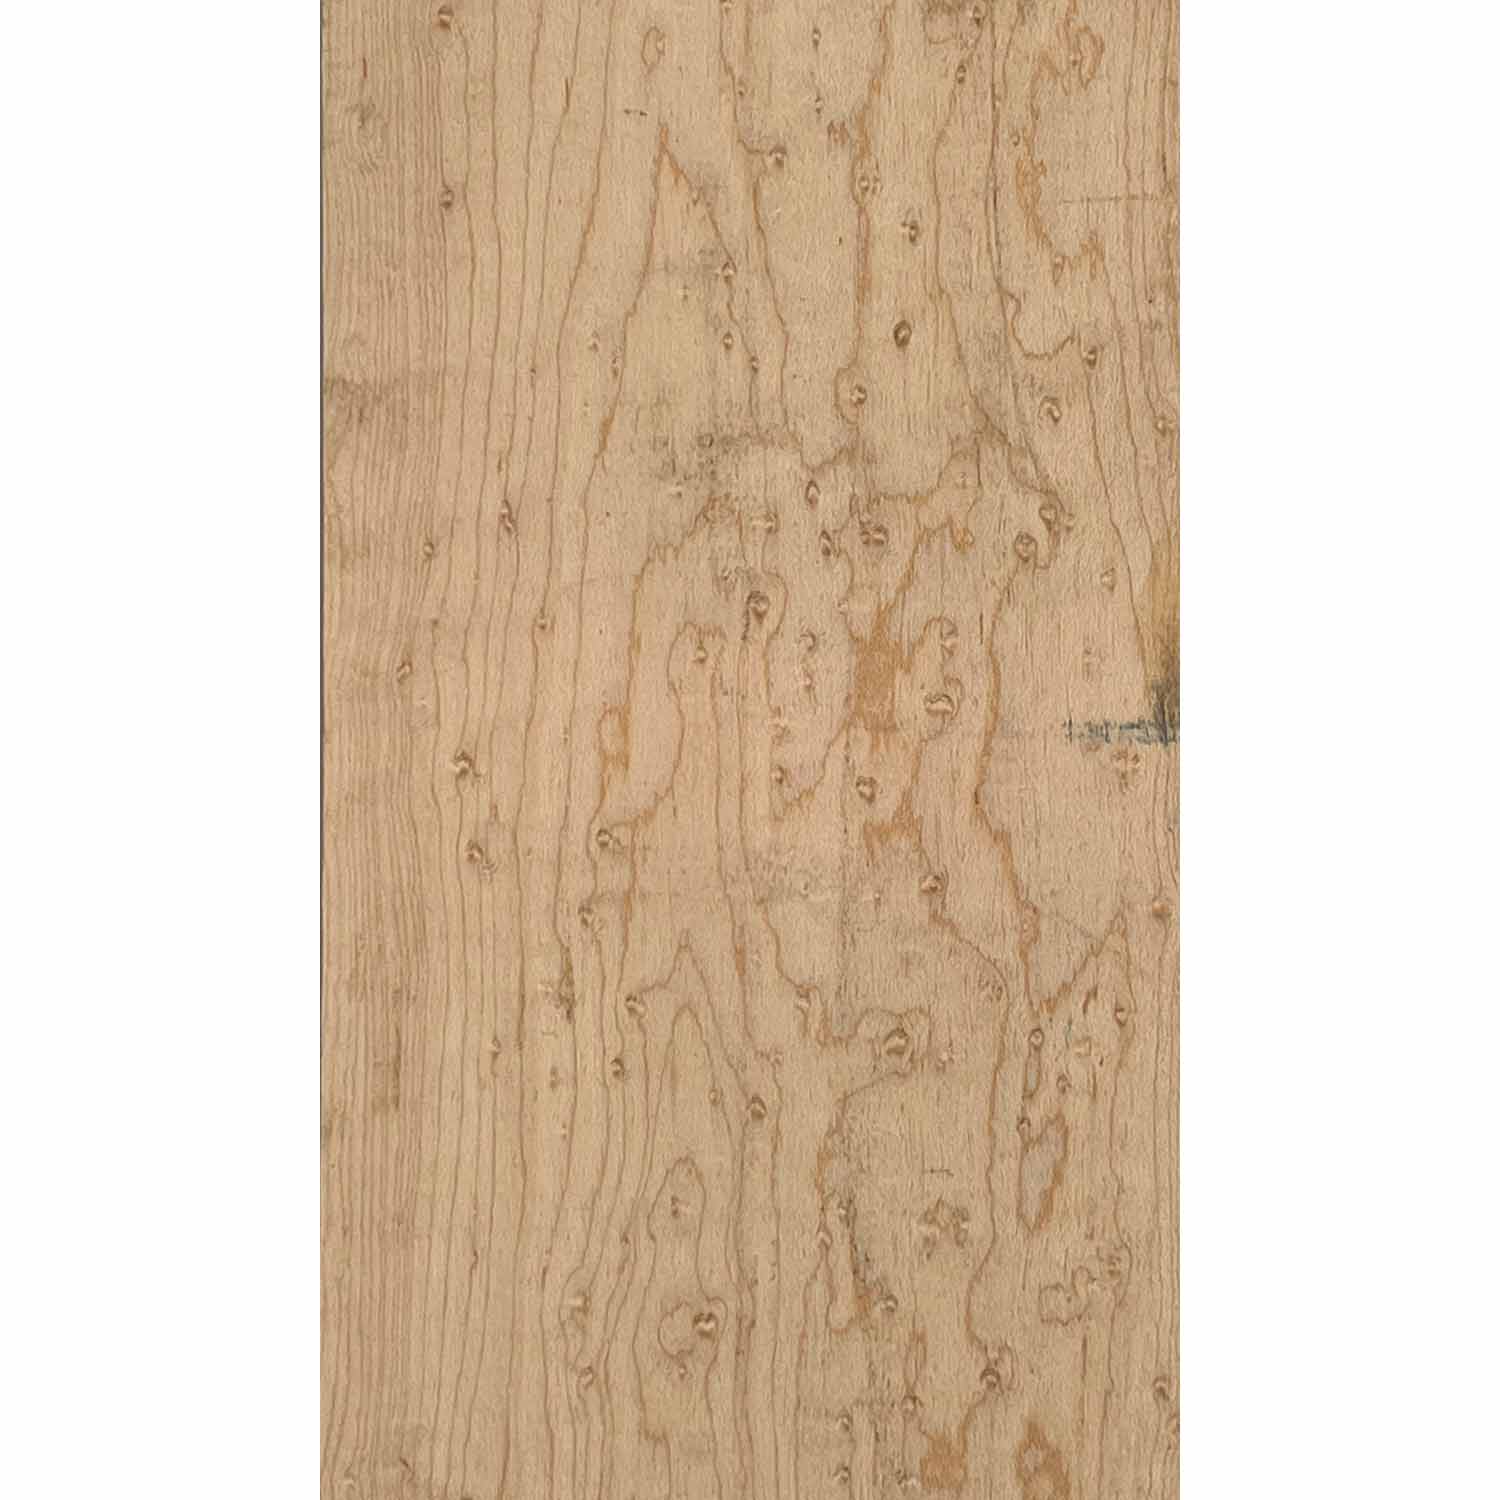 Birdseye Maple (White) 4/4 Lumber - Exotic Wood Zone Lumber